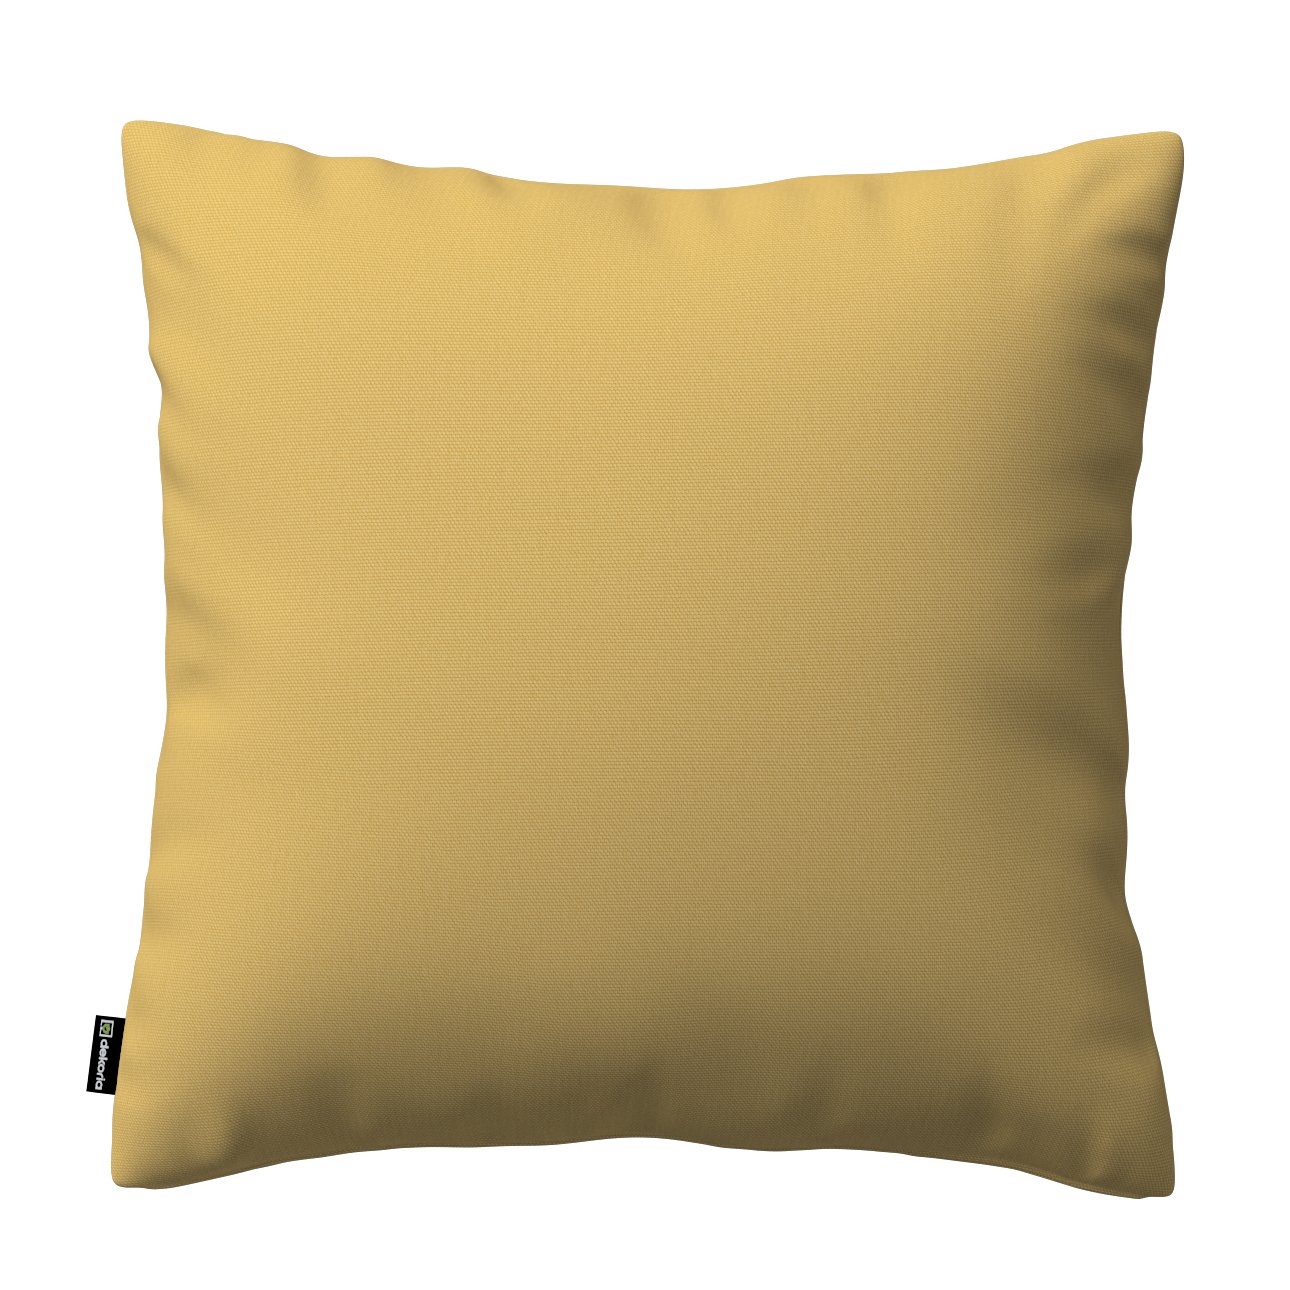 Dekoria Karin - jednoduchá obliečka, matná žltá, 50 x 50 cm, Cotton Panama, 702-41